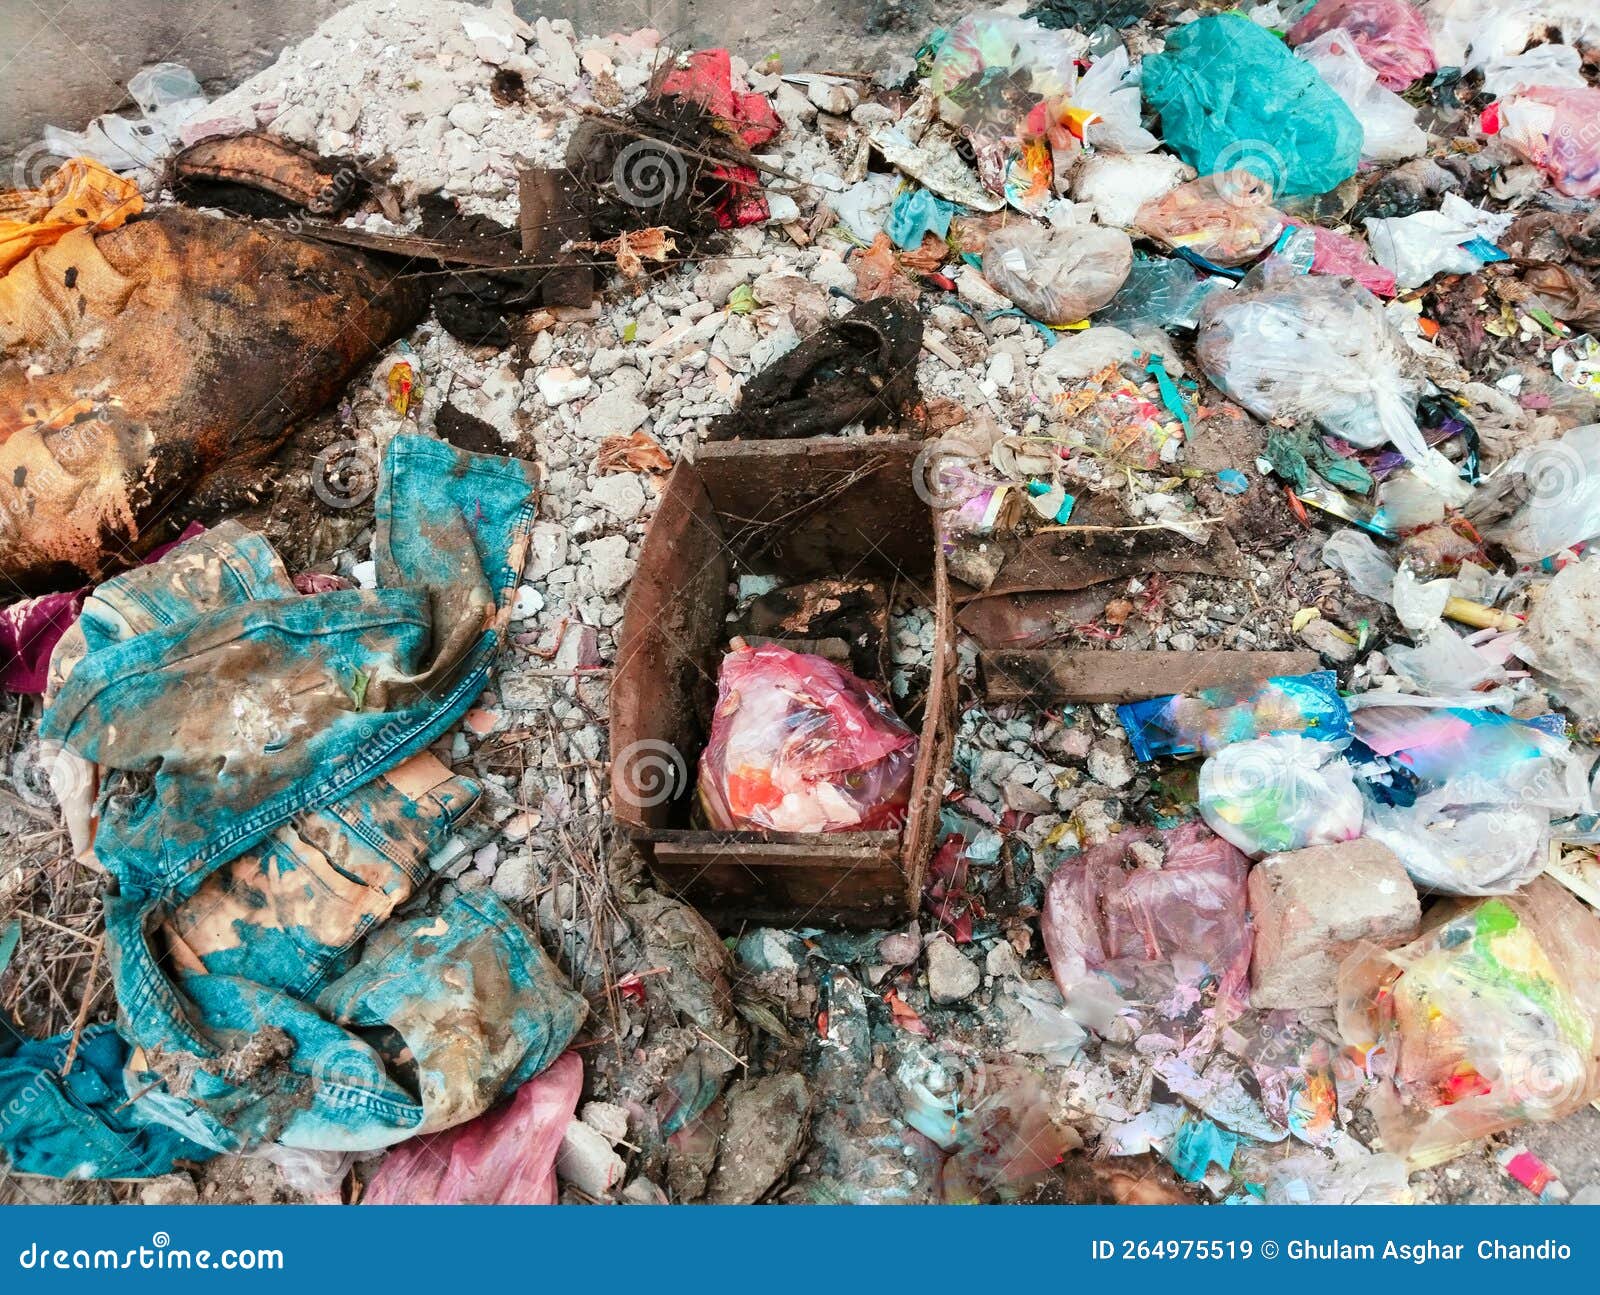 garbage heap household waste garbage-pile trash rubbish dump litter dirty solid-rubbish basura, ordures, lixo, photo